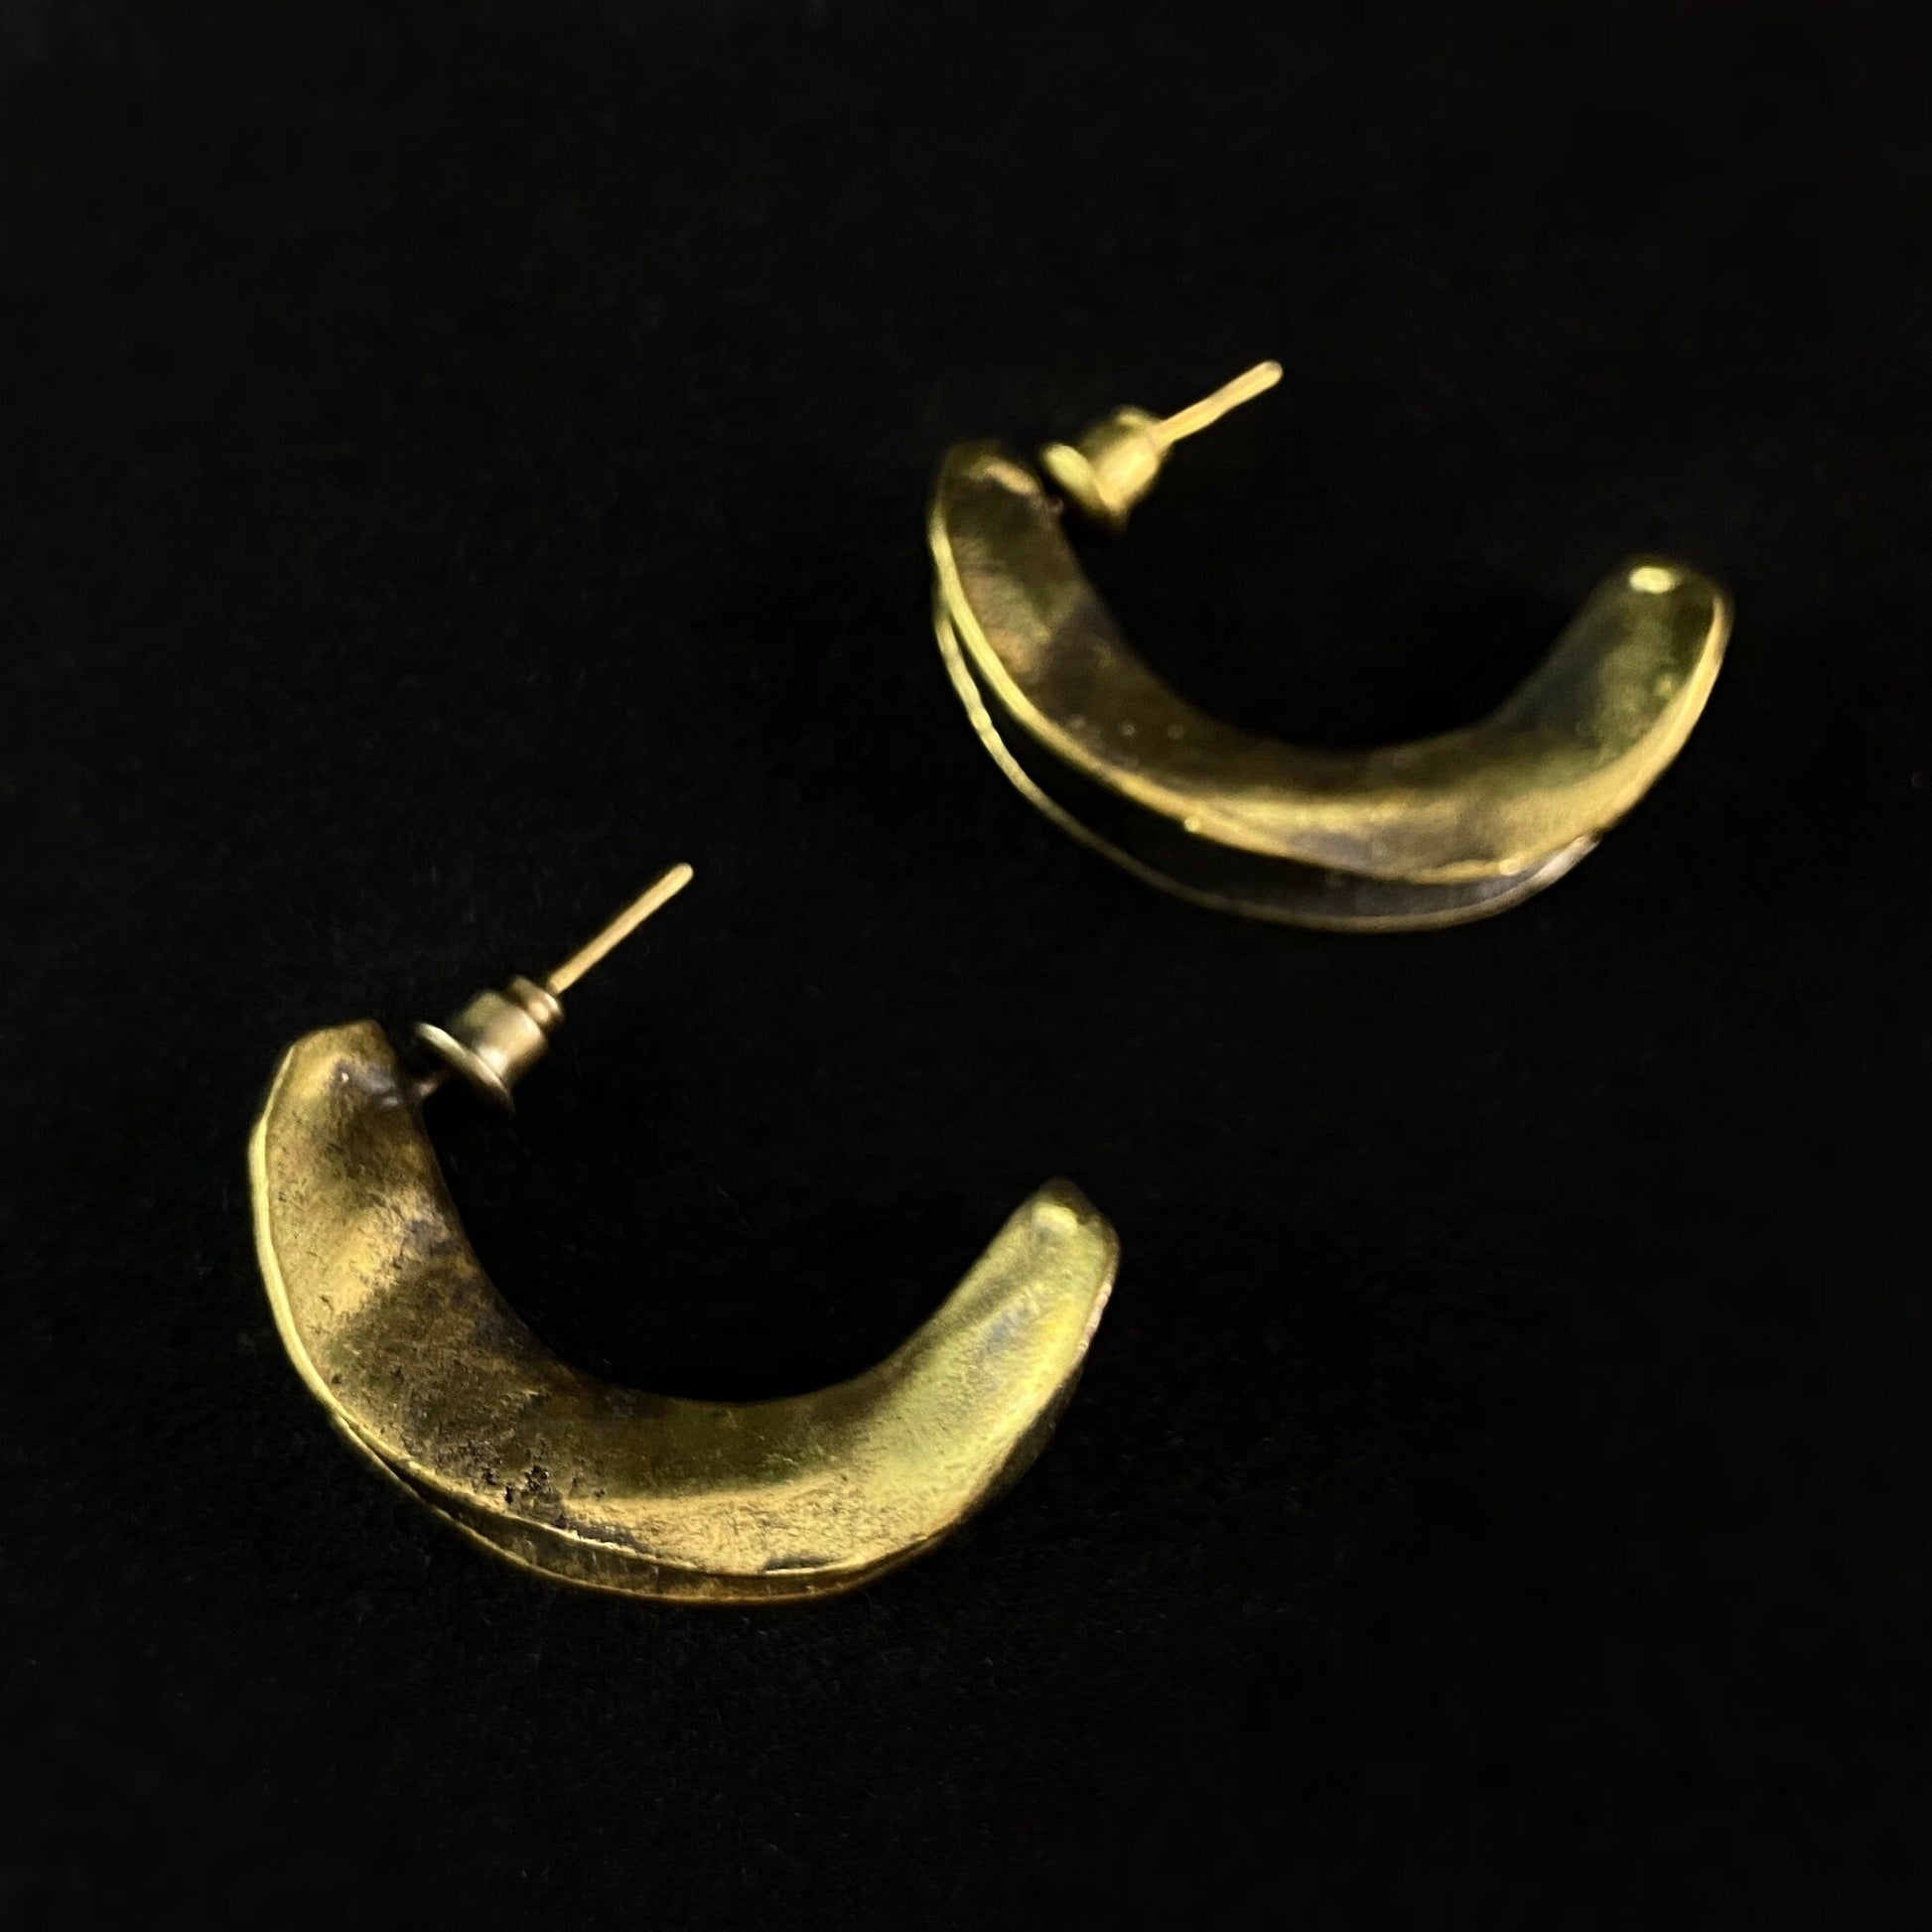 Gold Chunky Hammered Hoop Earrings, Handmade, Nickel Free - Elegant Minimalist Jewelry for Women